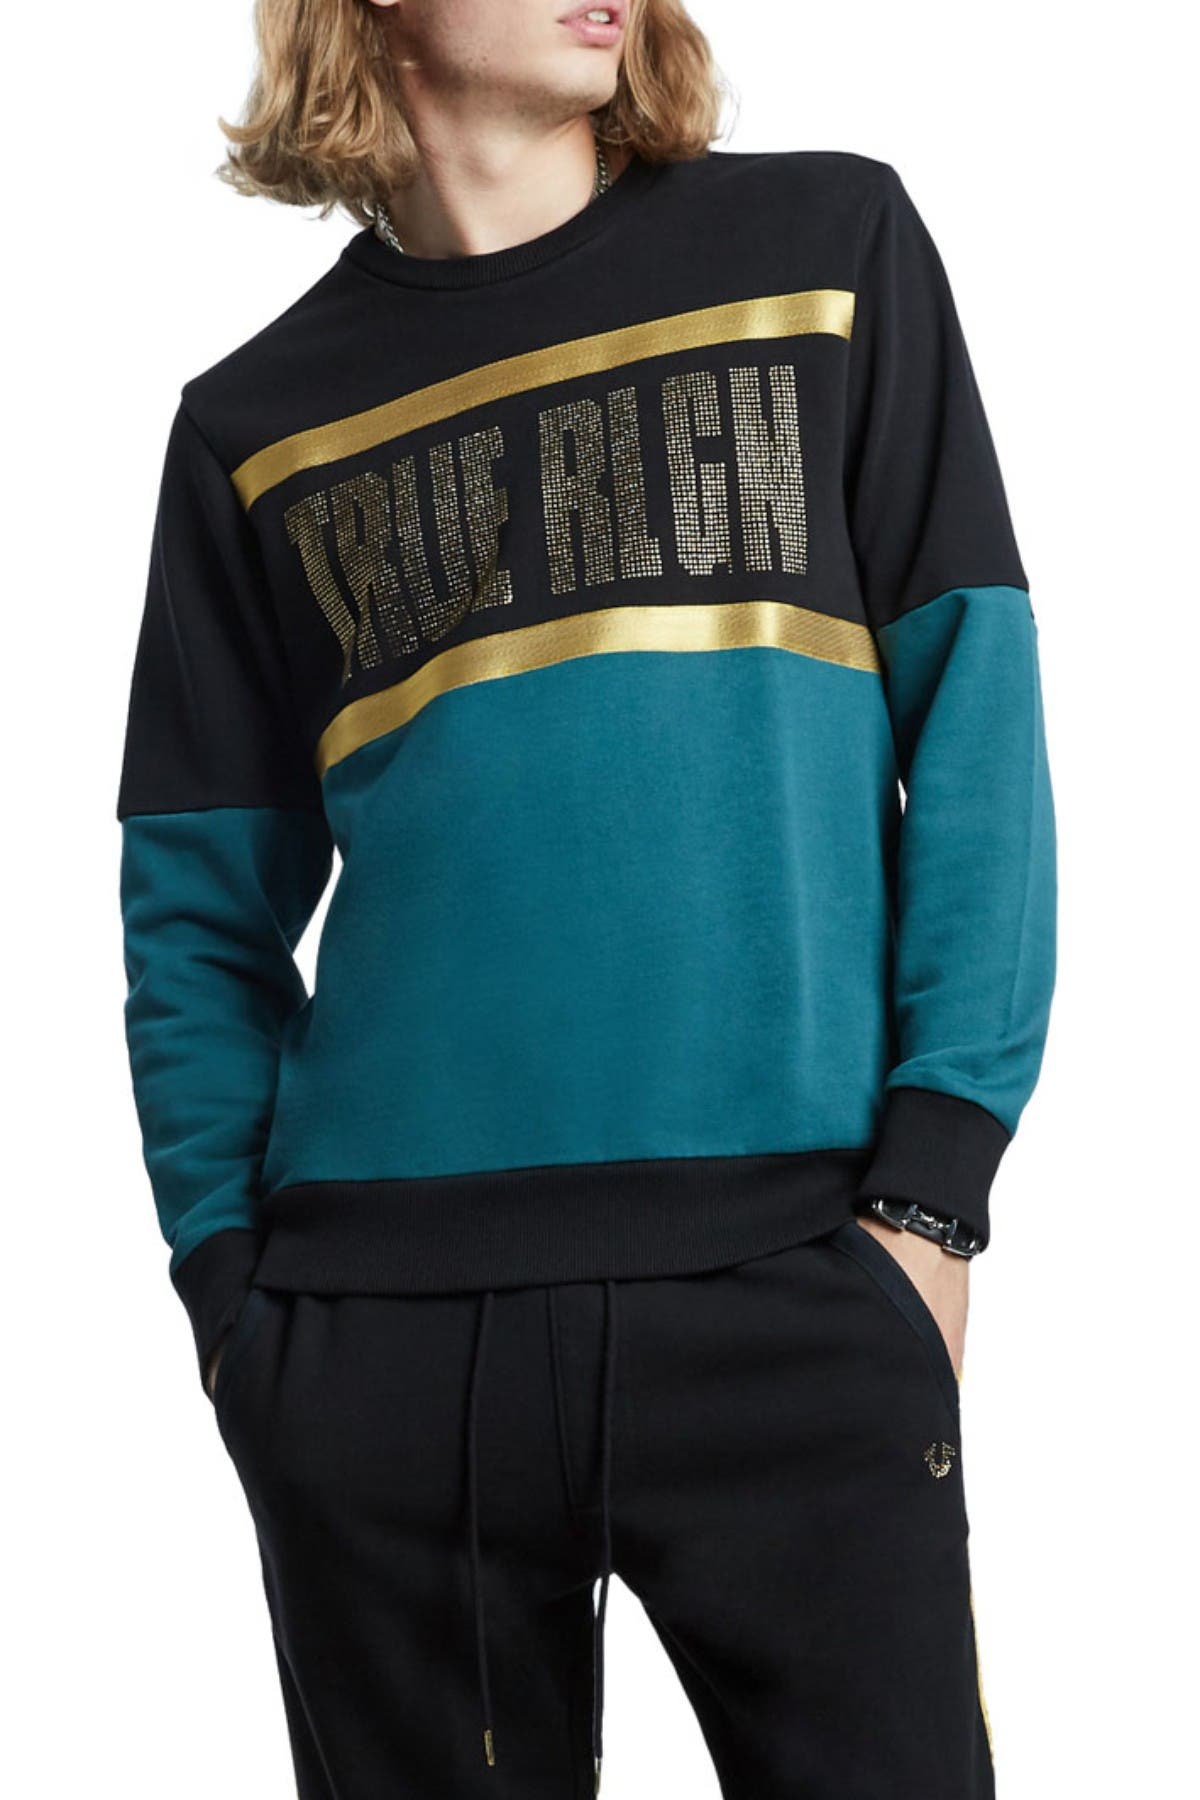 true religion blue sweater